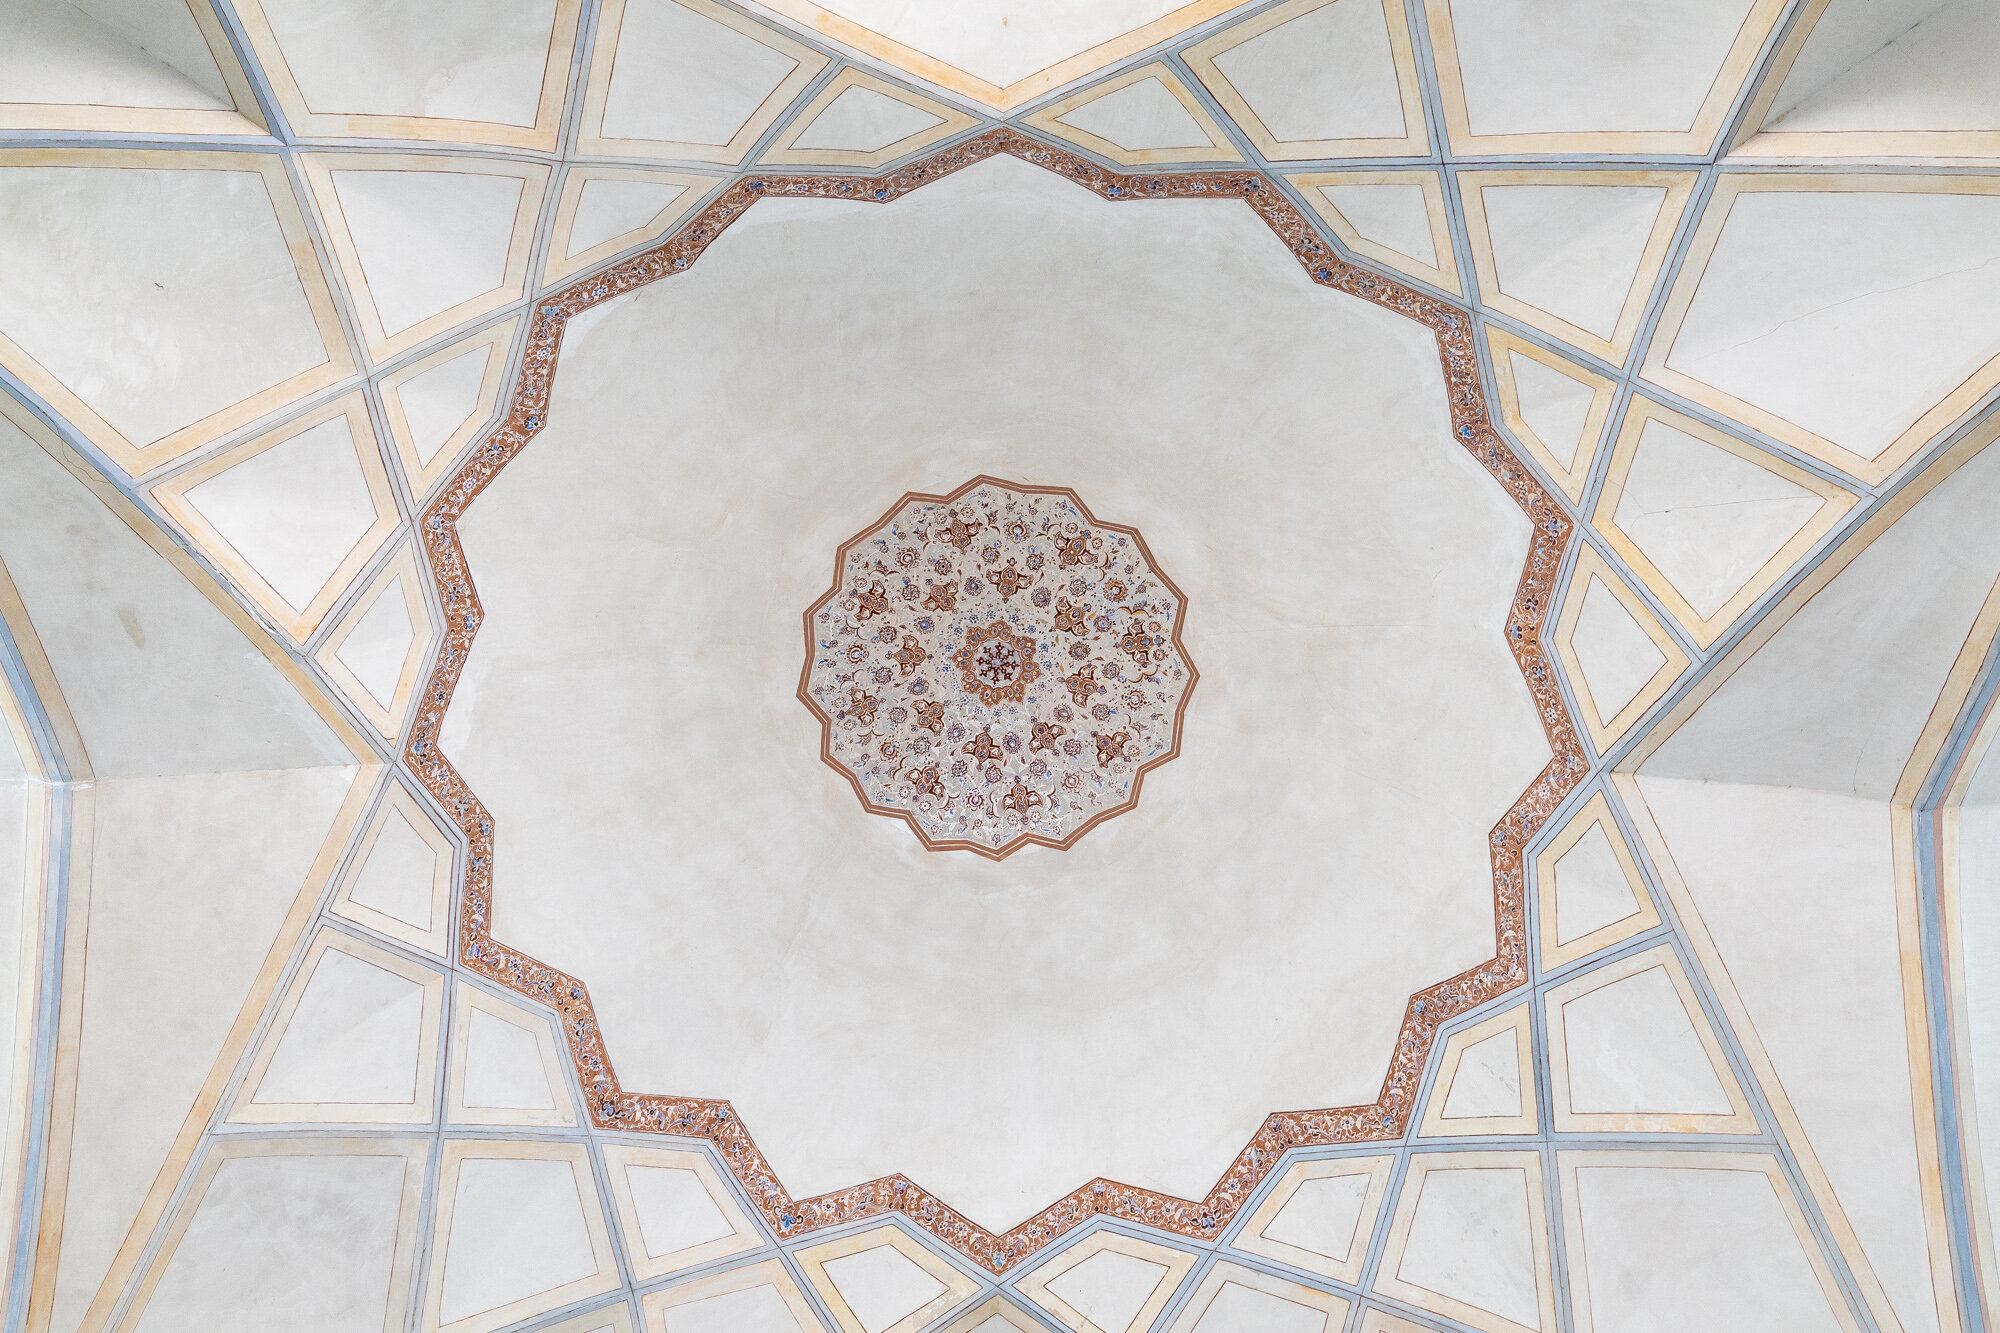  Ceiling details from Fin Garden, Kashan 